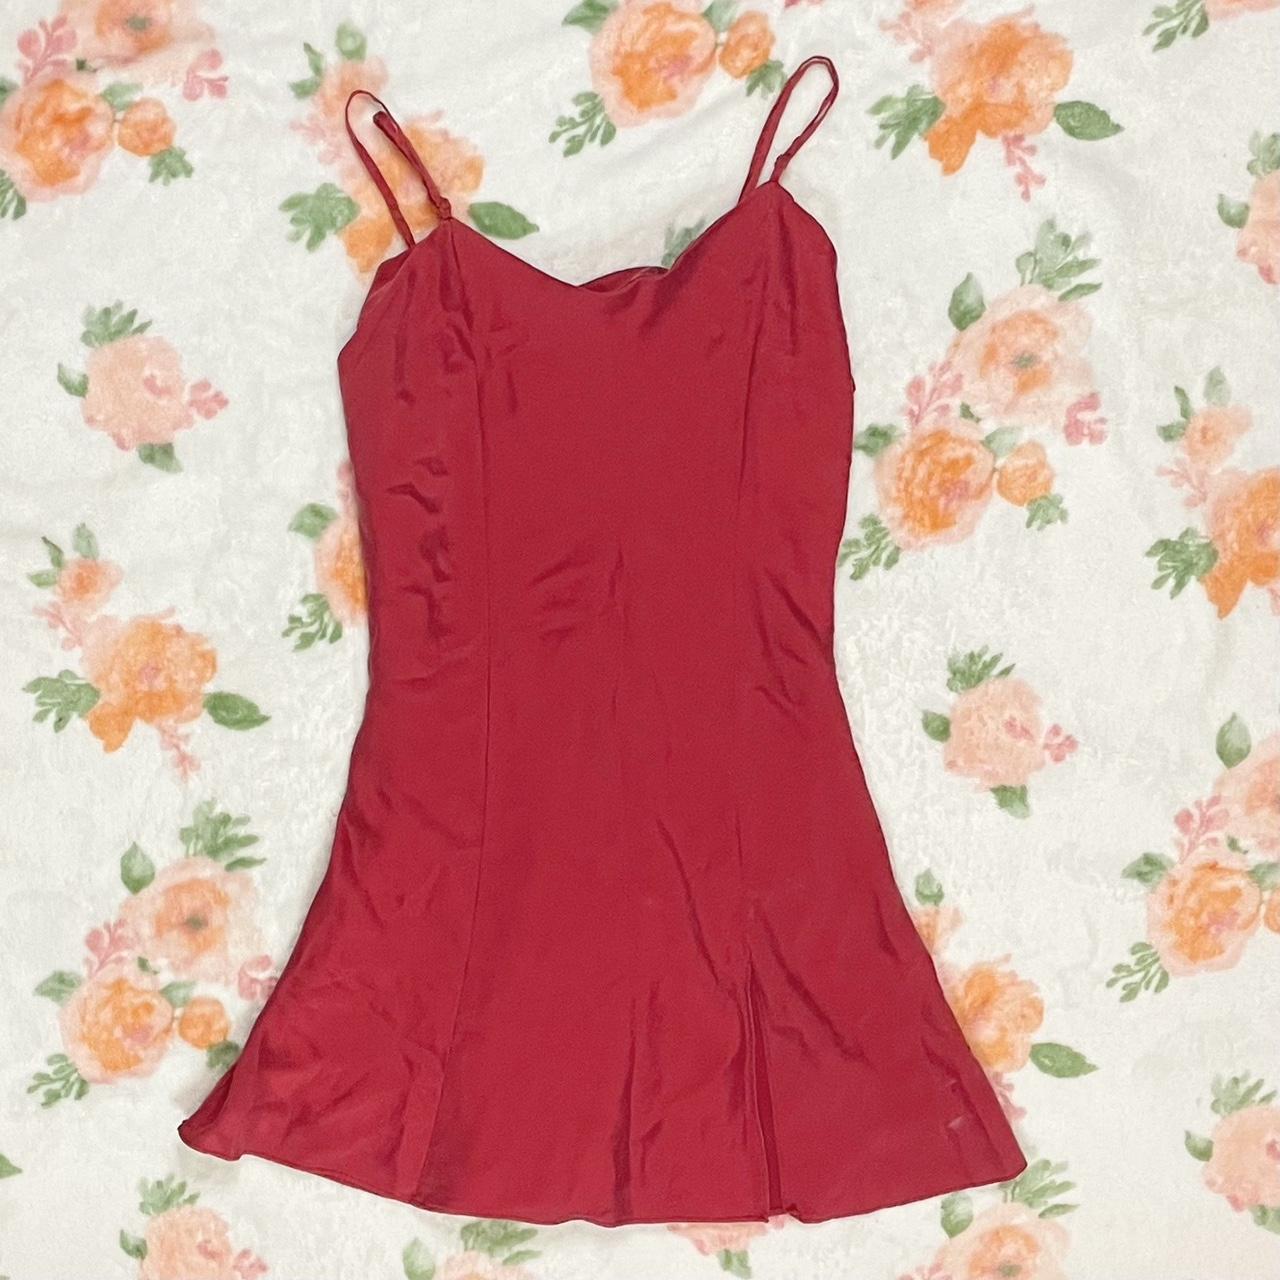 Victoria's Secret Women's Burgundy and Red Dress | Depop